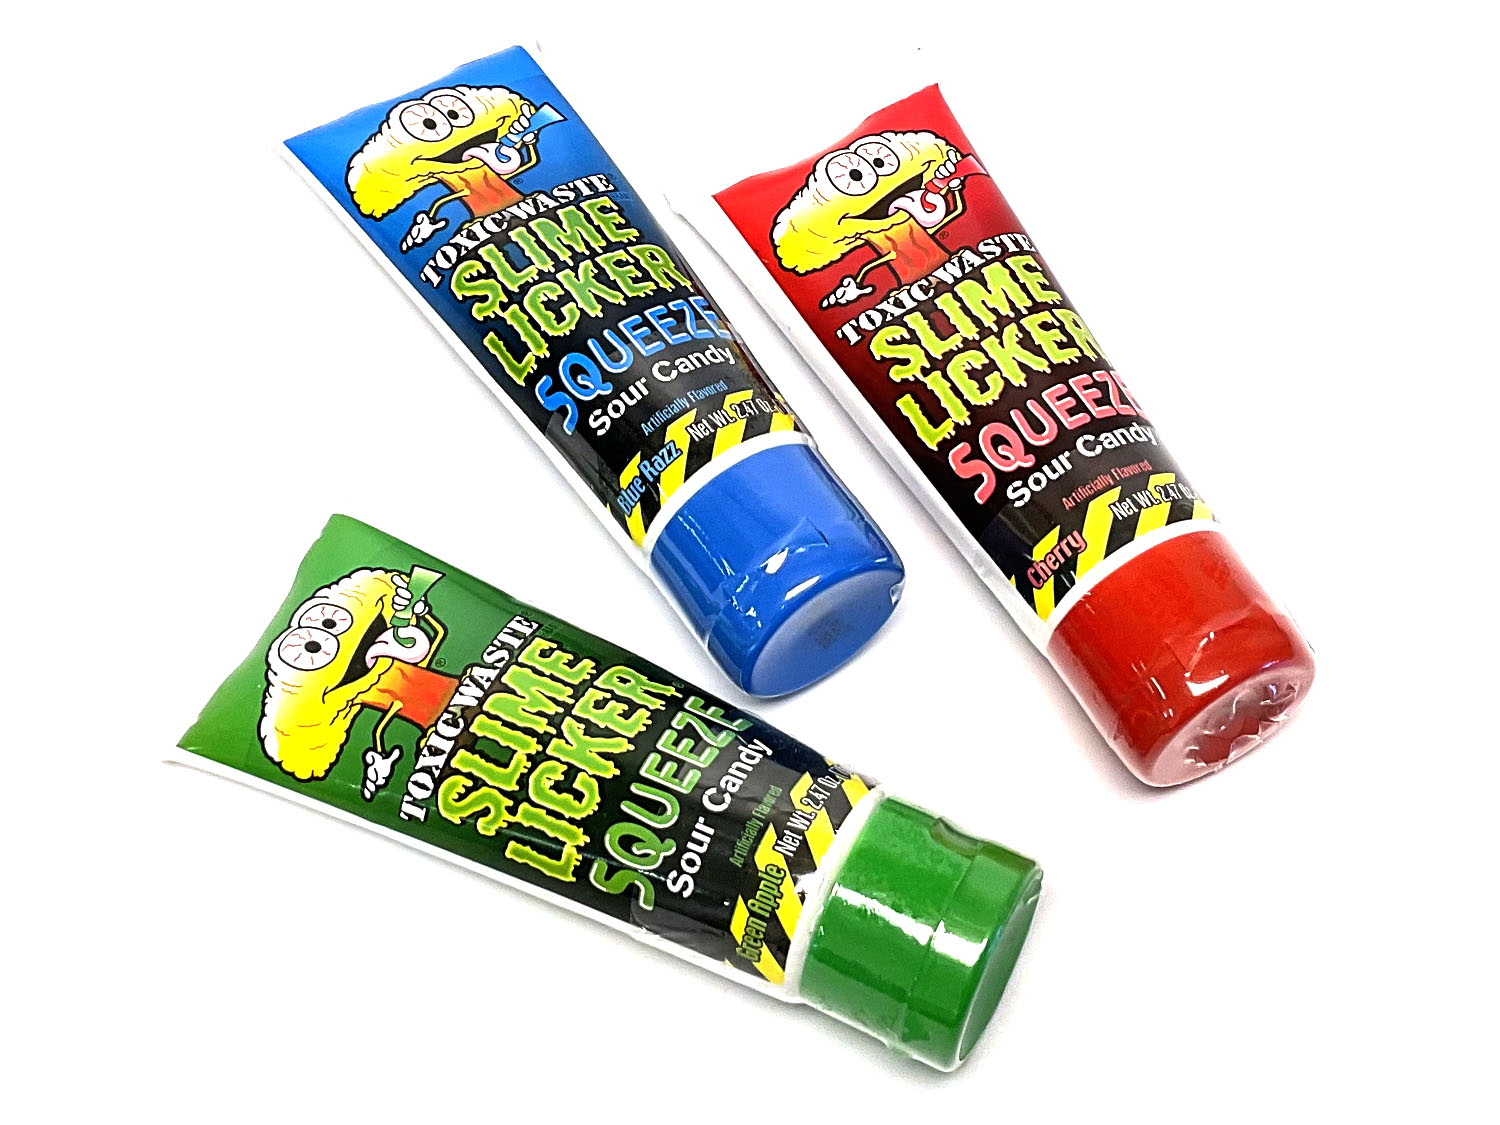 Toxic Waste Mega Slime Lickers